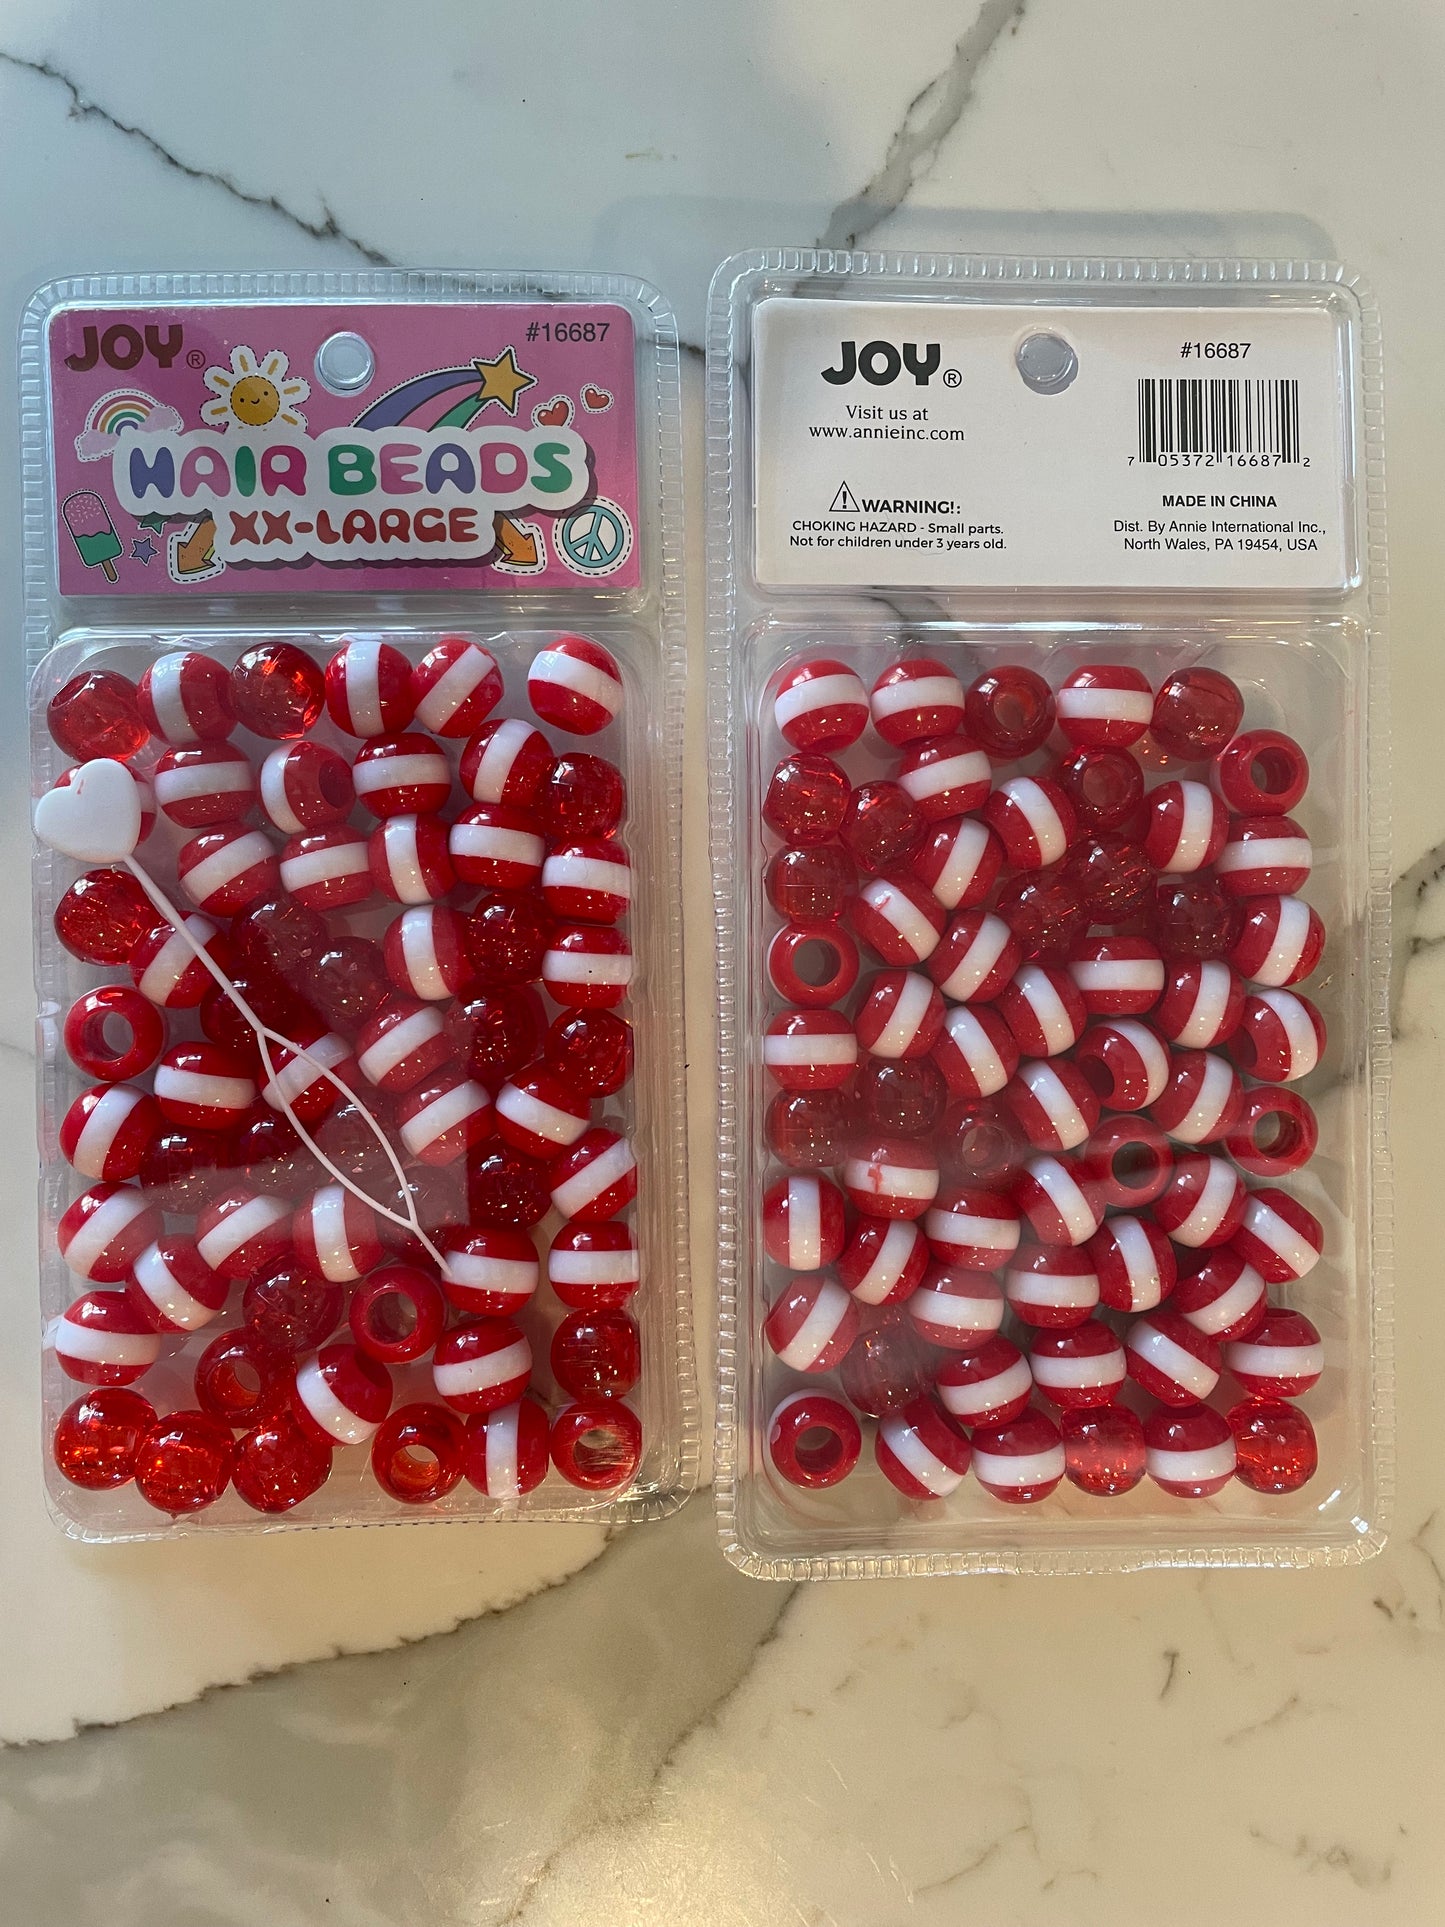 Joy Hair Beads XX-Large #16687